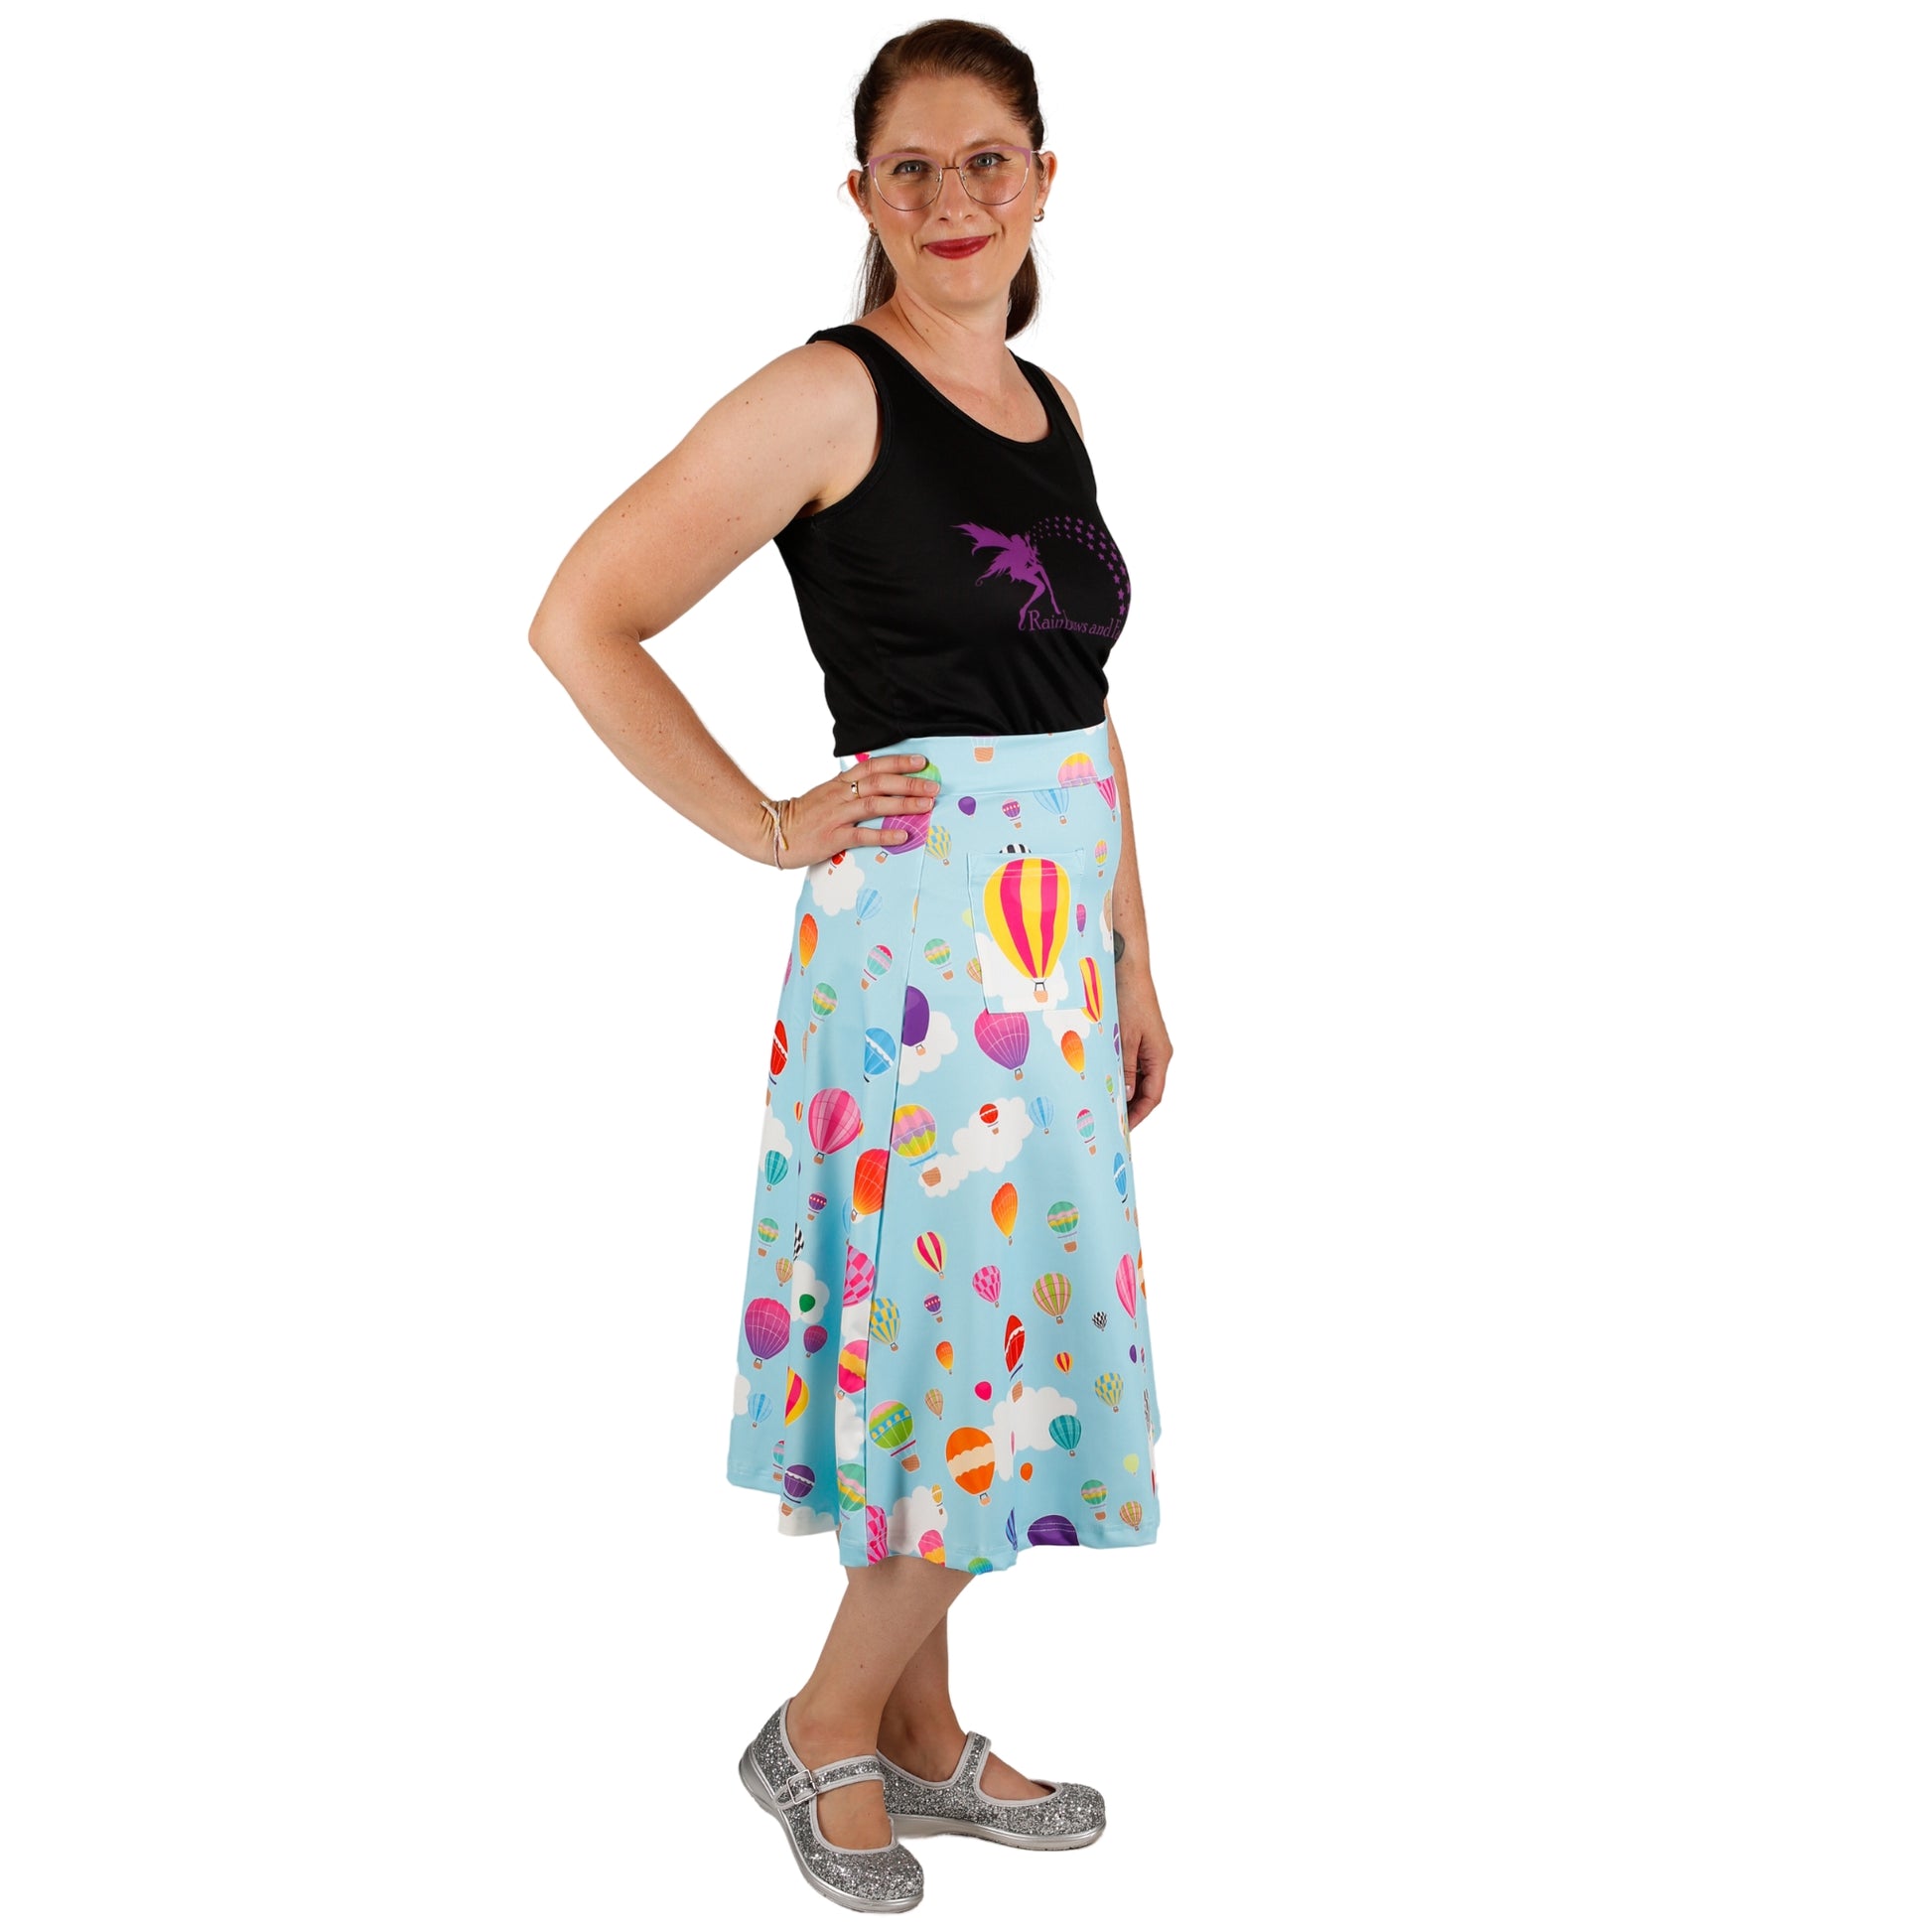 Whimsy Original Skirt by RainbowsAndFairies.com.au (Balloons - Hot Air Balloon - Skirt With Pockets - Kitsch) - SKU: CL_OSKRT_WHIMS_ORG - Pic-02